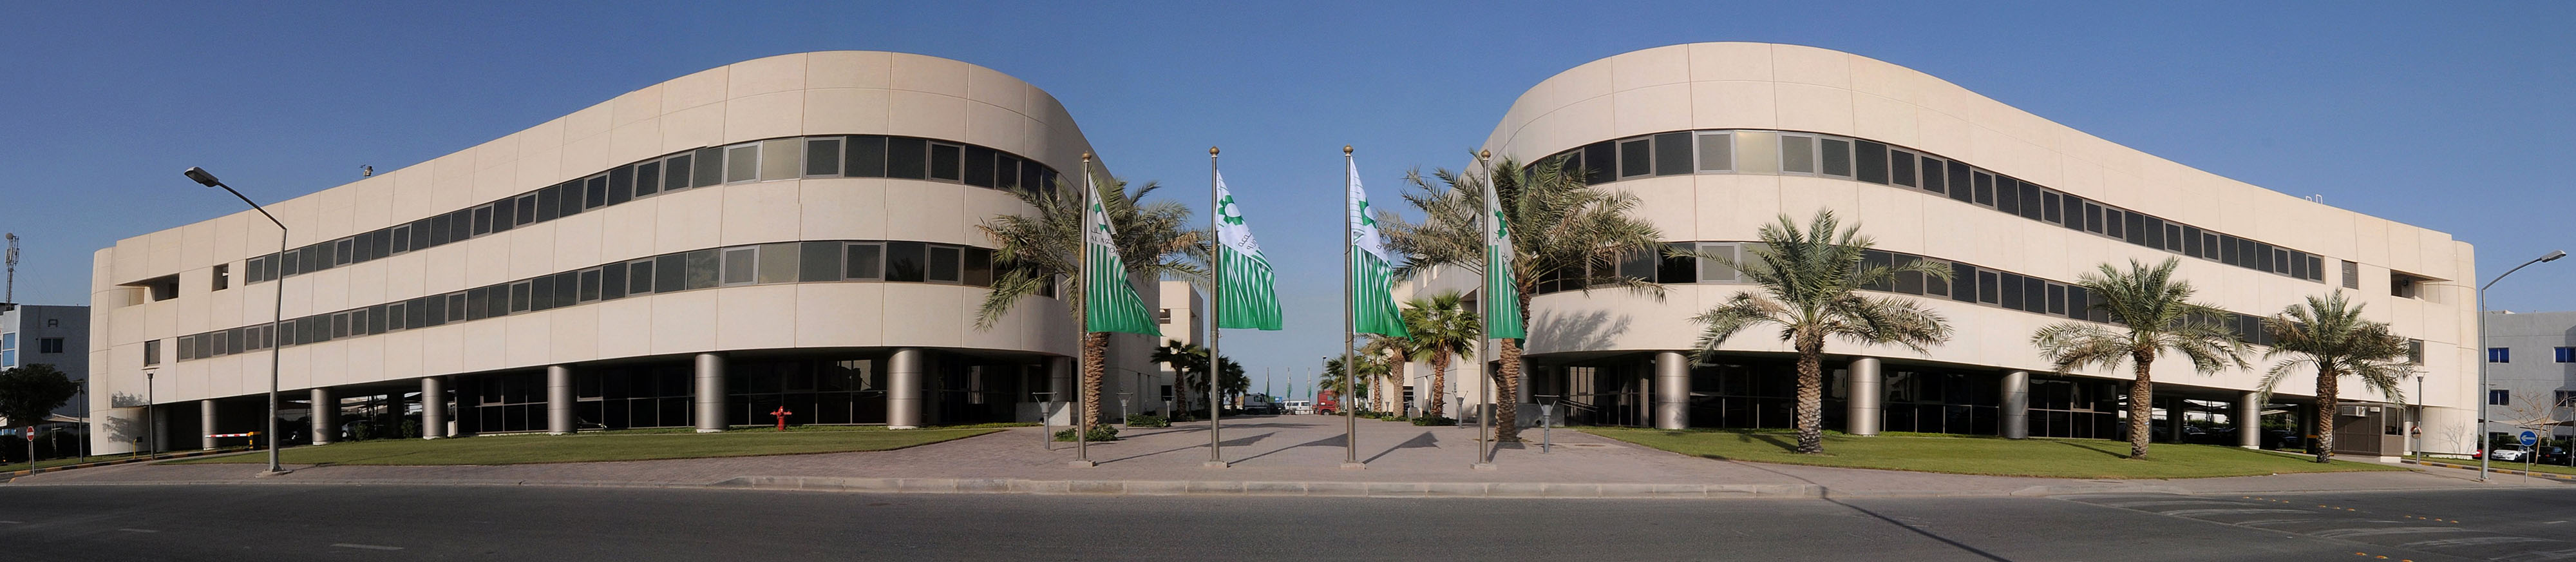 Bader Al Mulla Headquarters